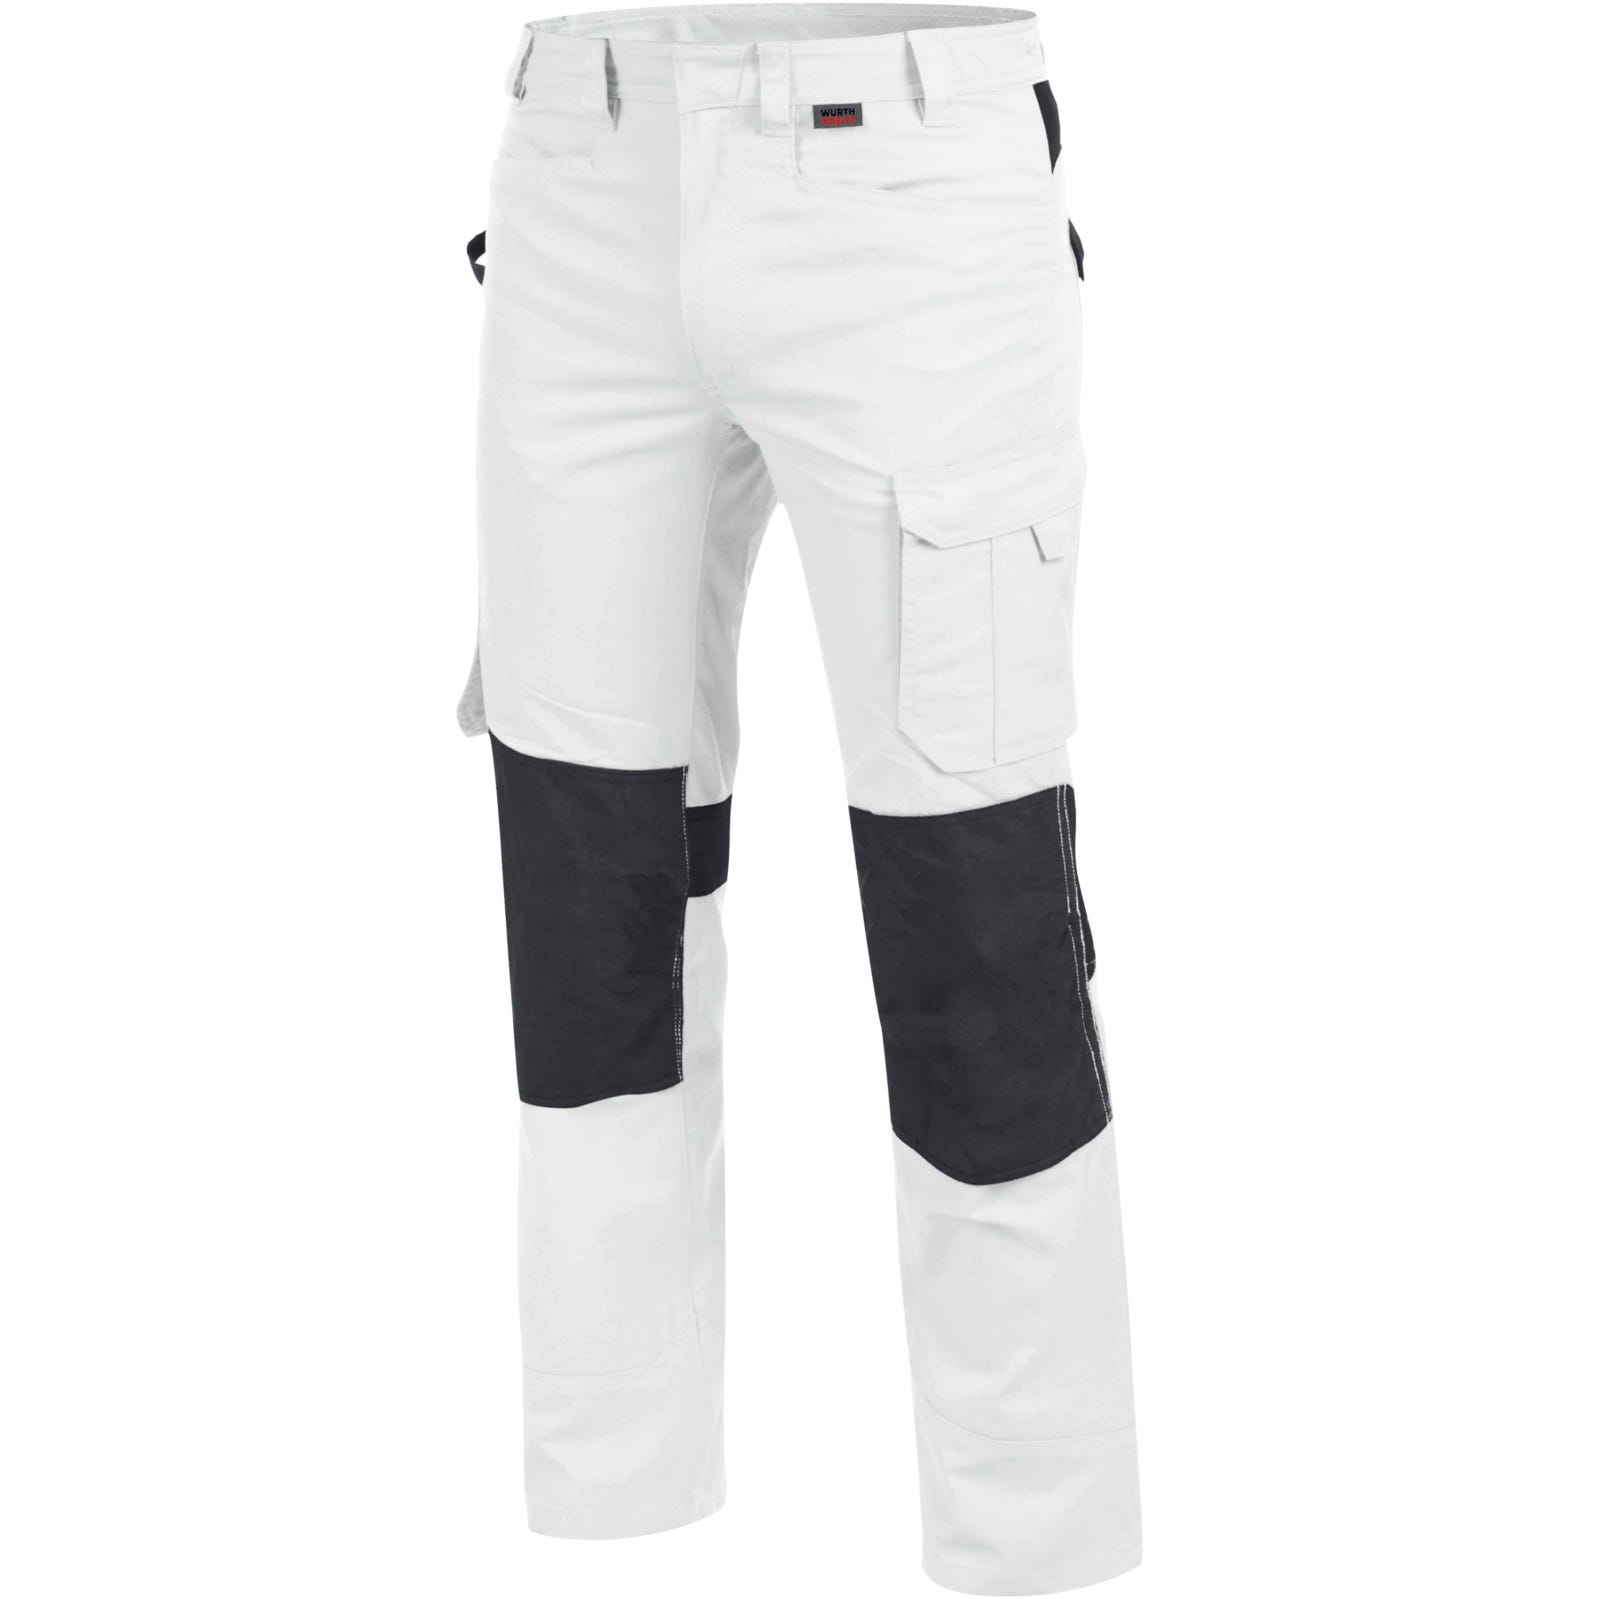 Pantalon de travail Cetus Würth MODYF blanc/anthracite - Taille 40